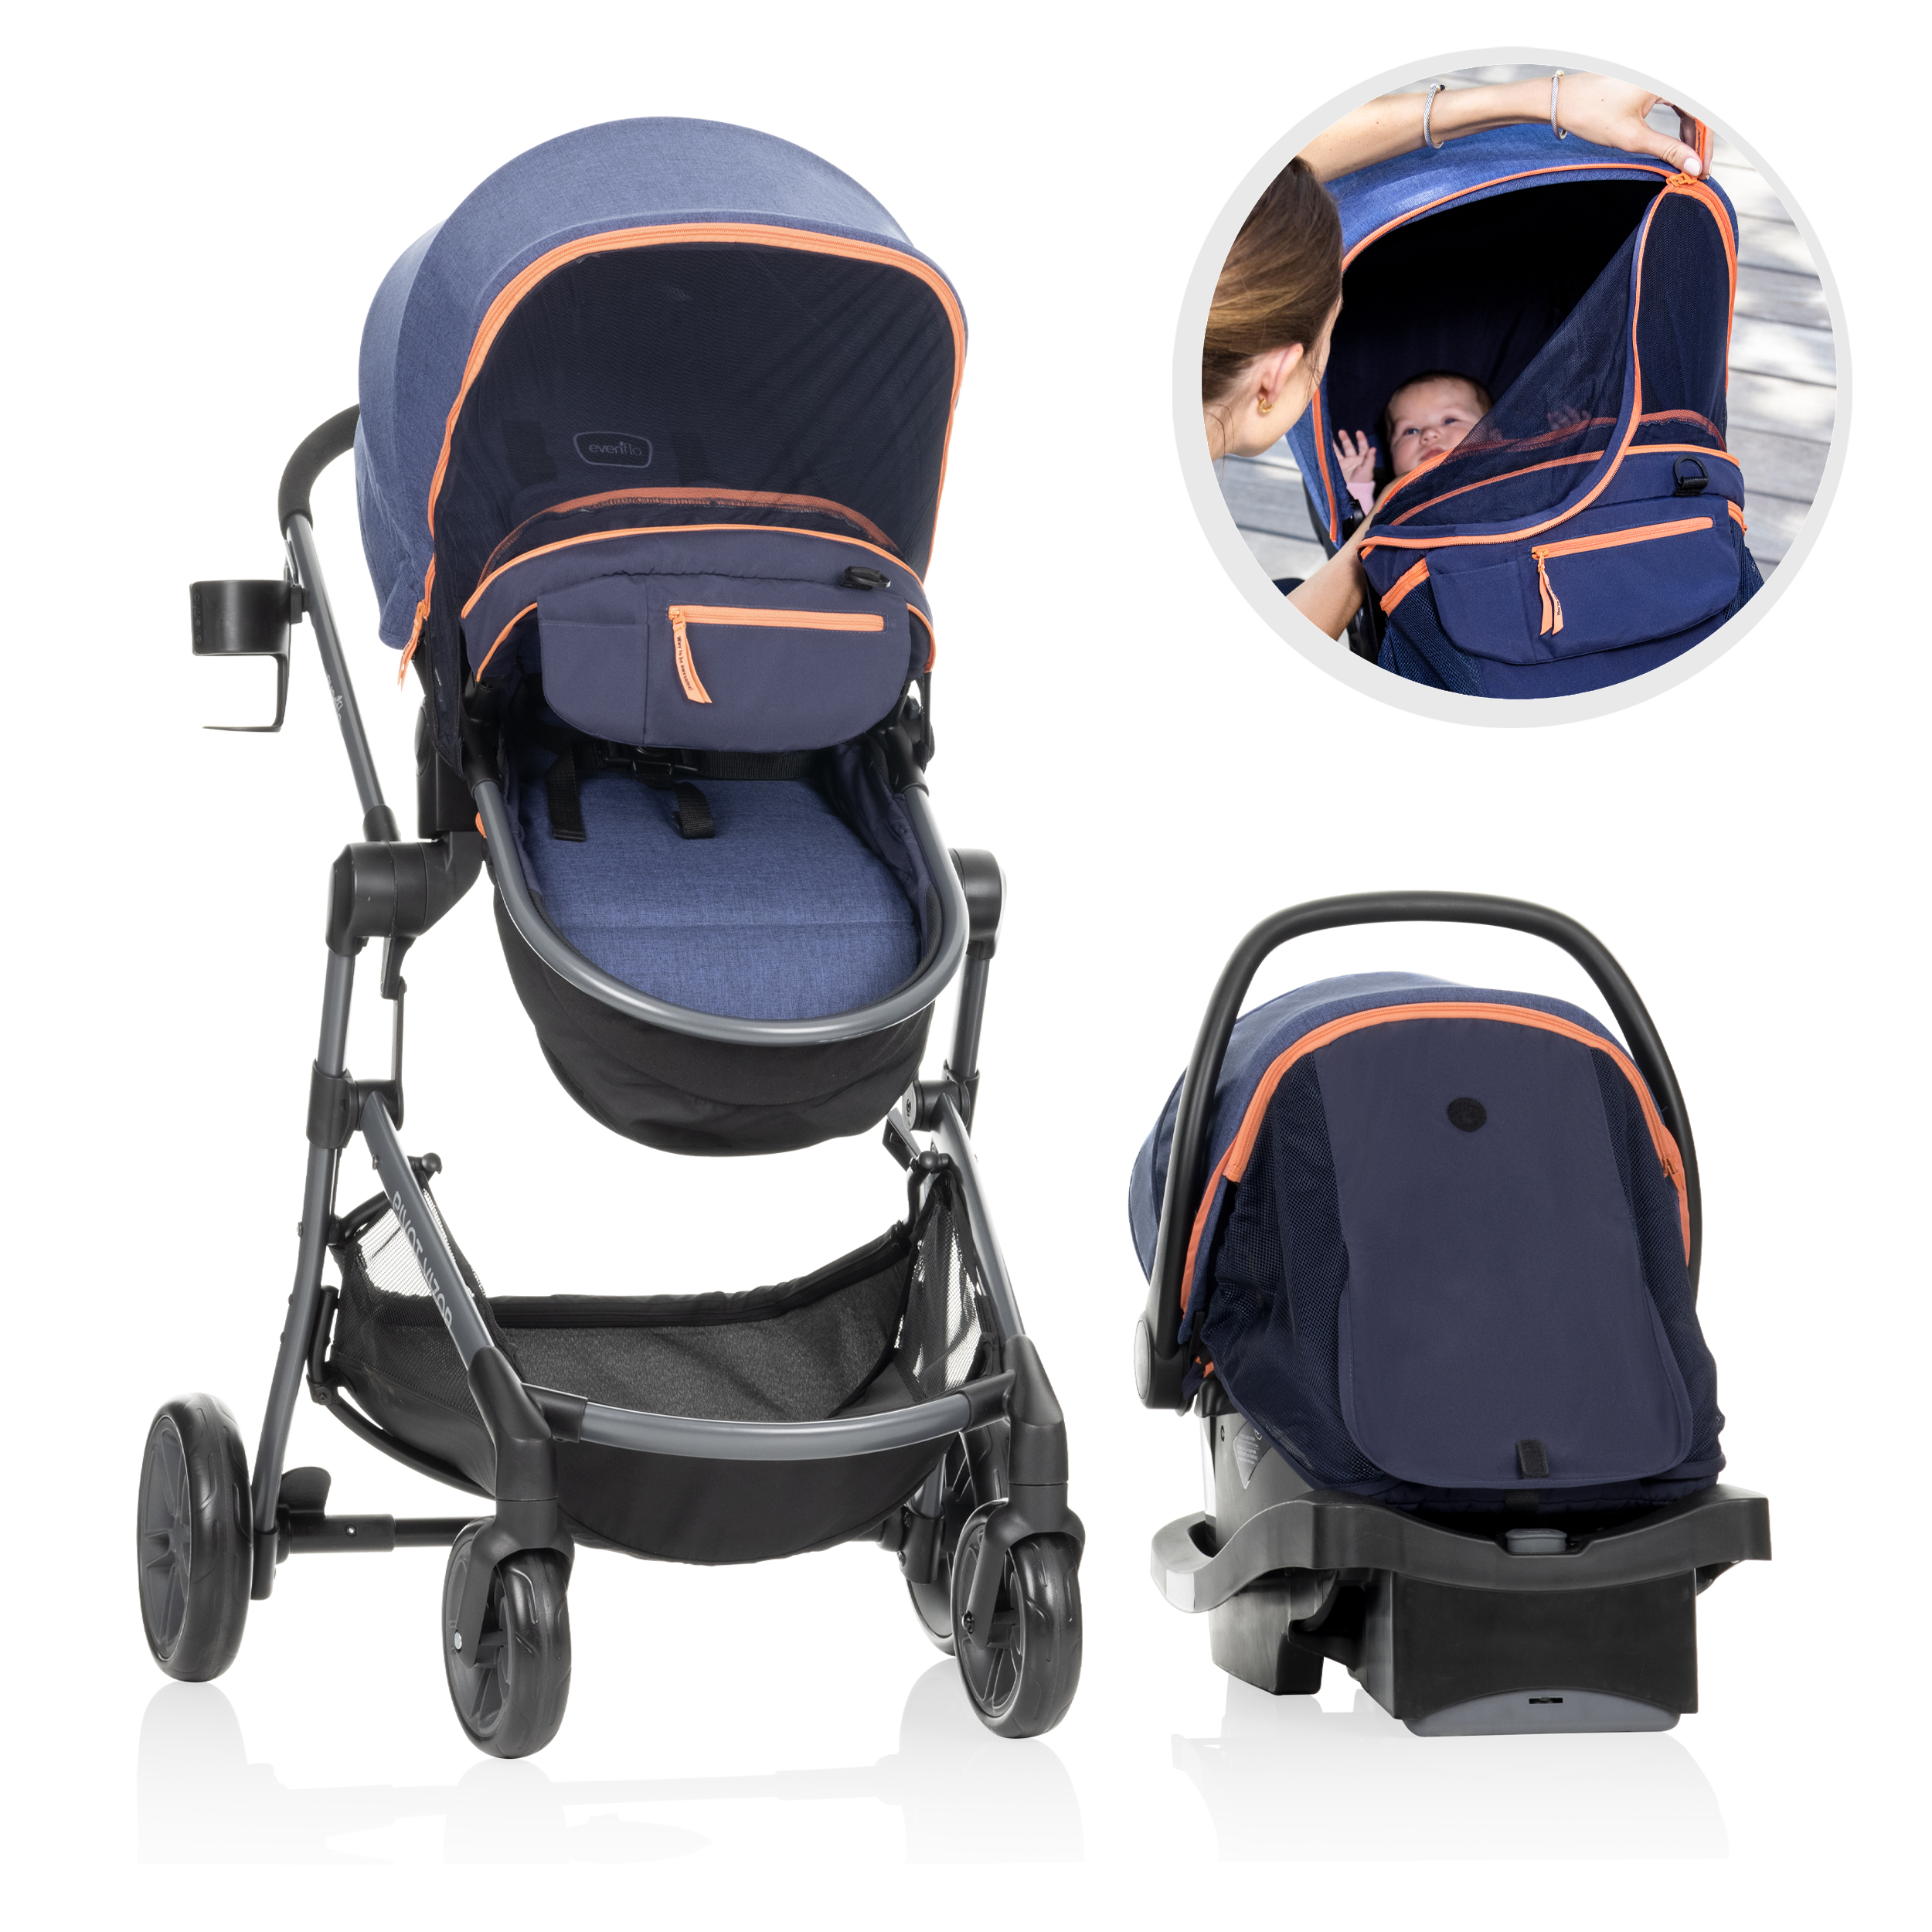 Pivot Vizor Travel System with LiteMax Infant Car Seat (Promenade Blue) - image 1 of 6